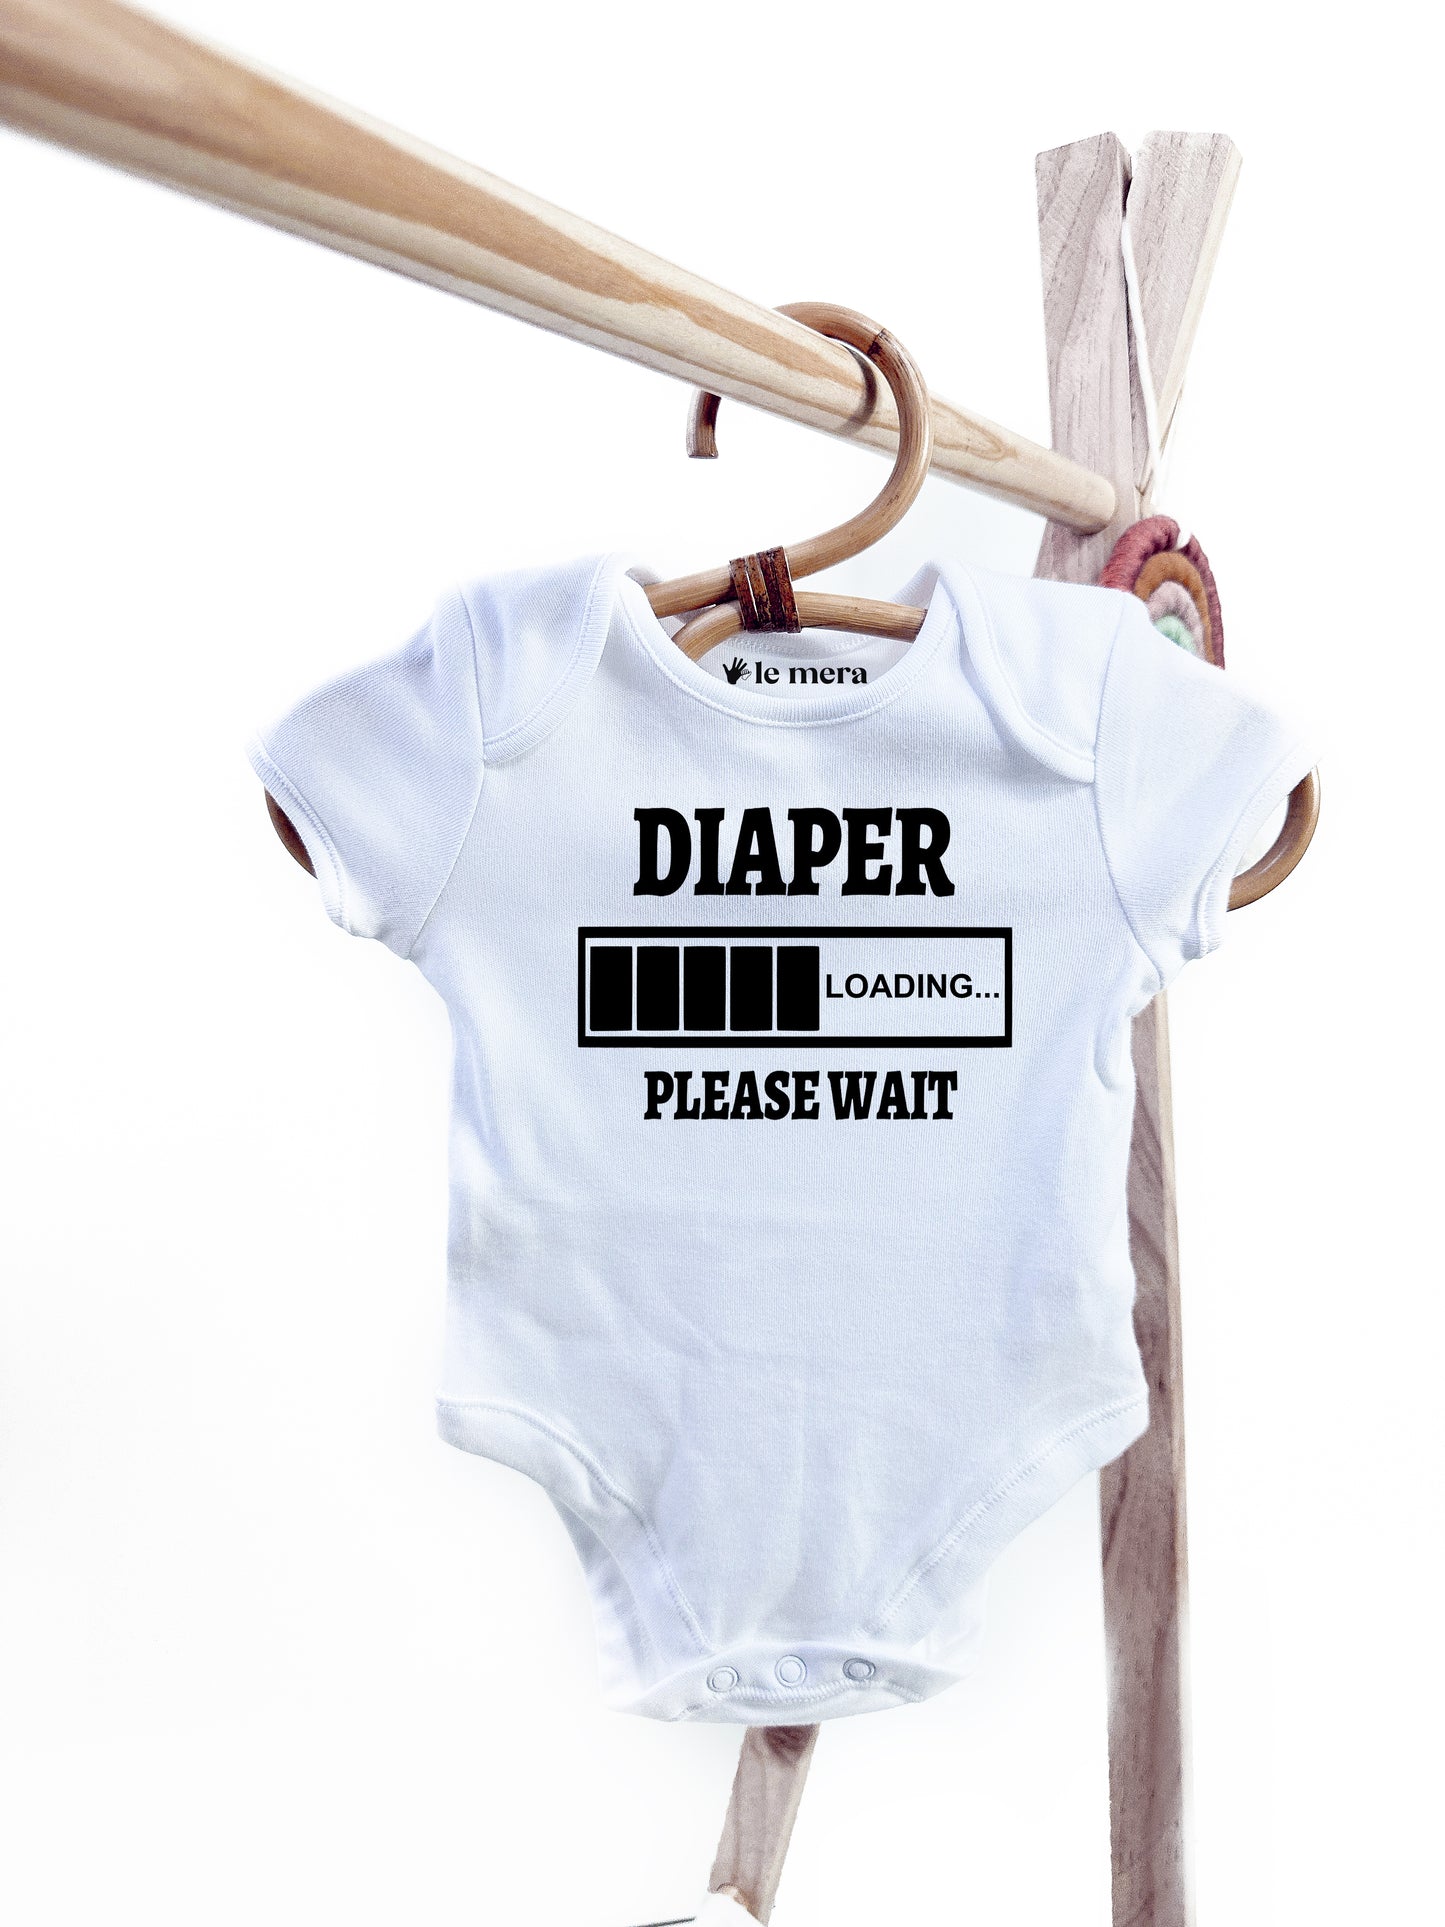 Diaper Loading Please Wait, Diaper Loading Baby Vest, Baby Grow